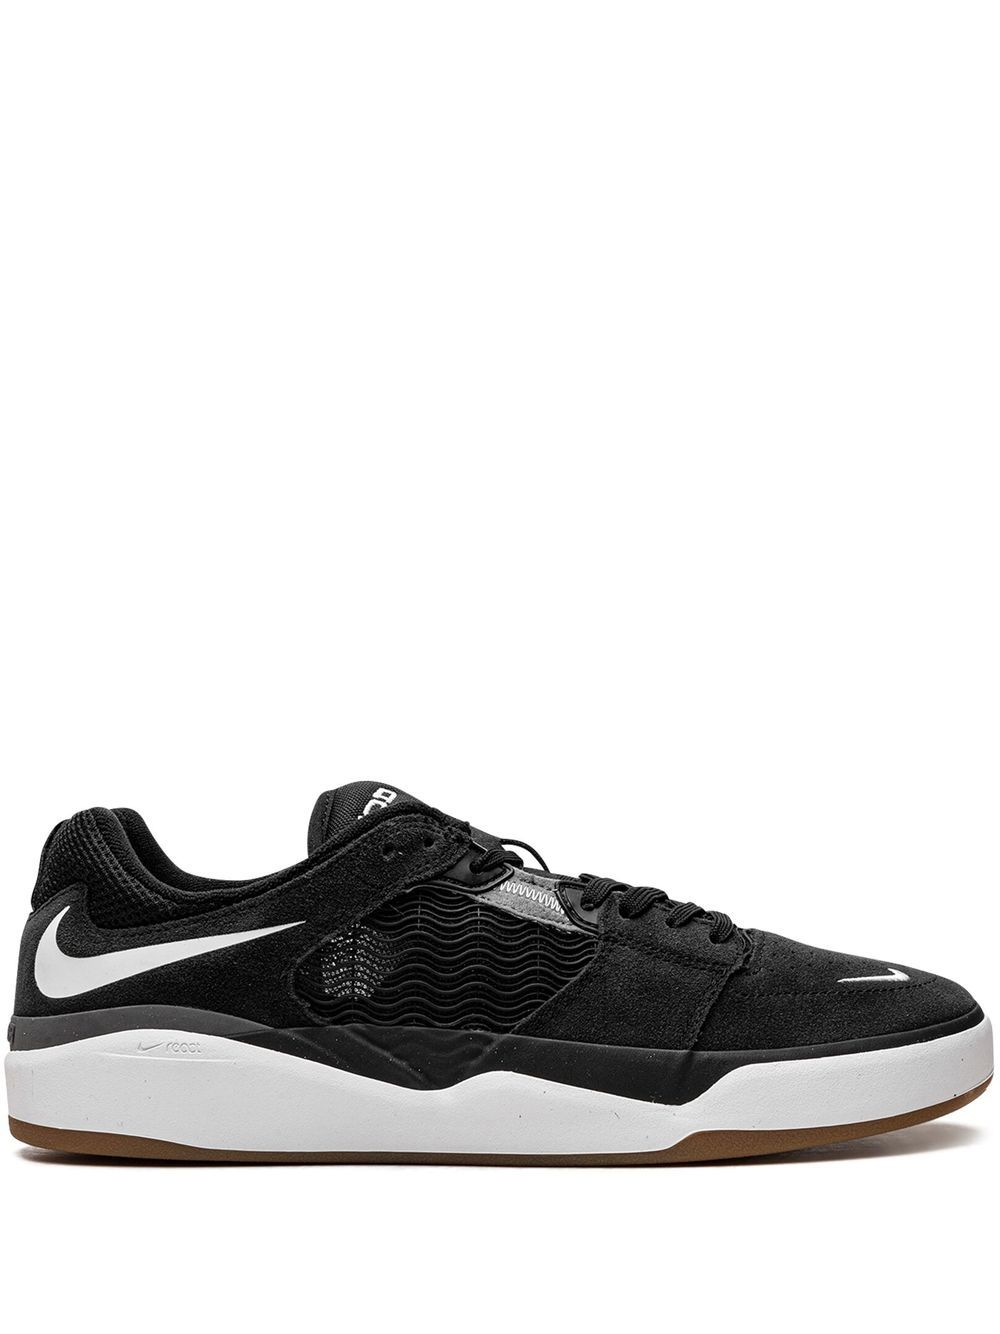 Nike SB Ishod Wair "Black/White" sneakers von Nike